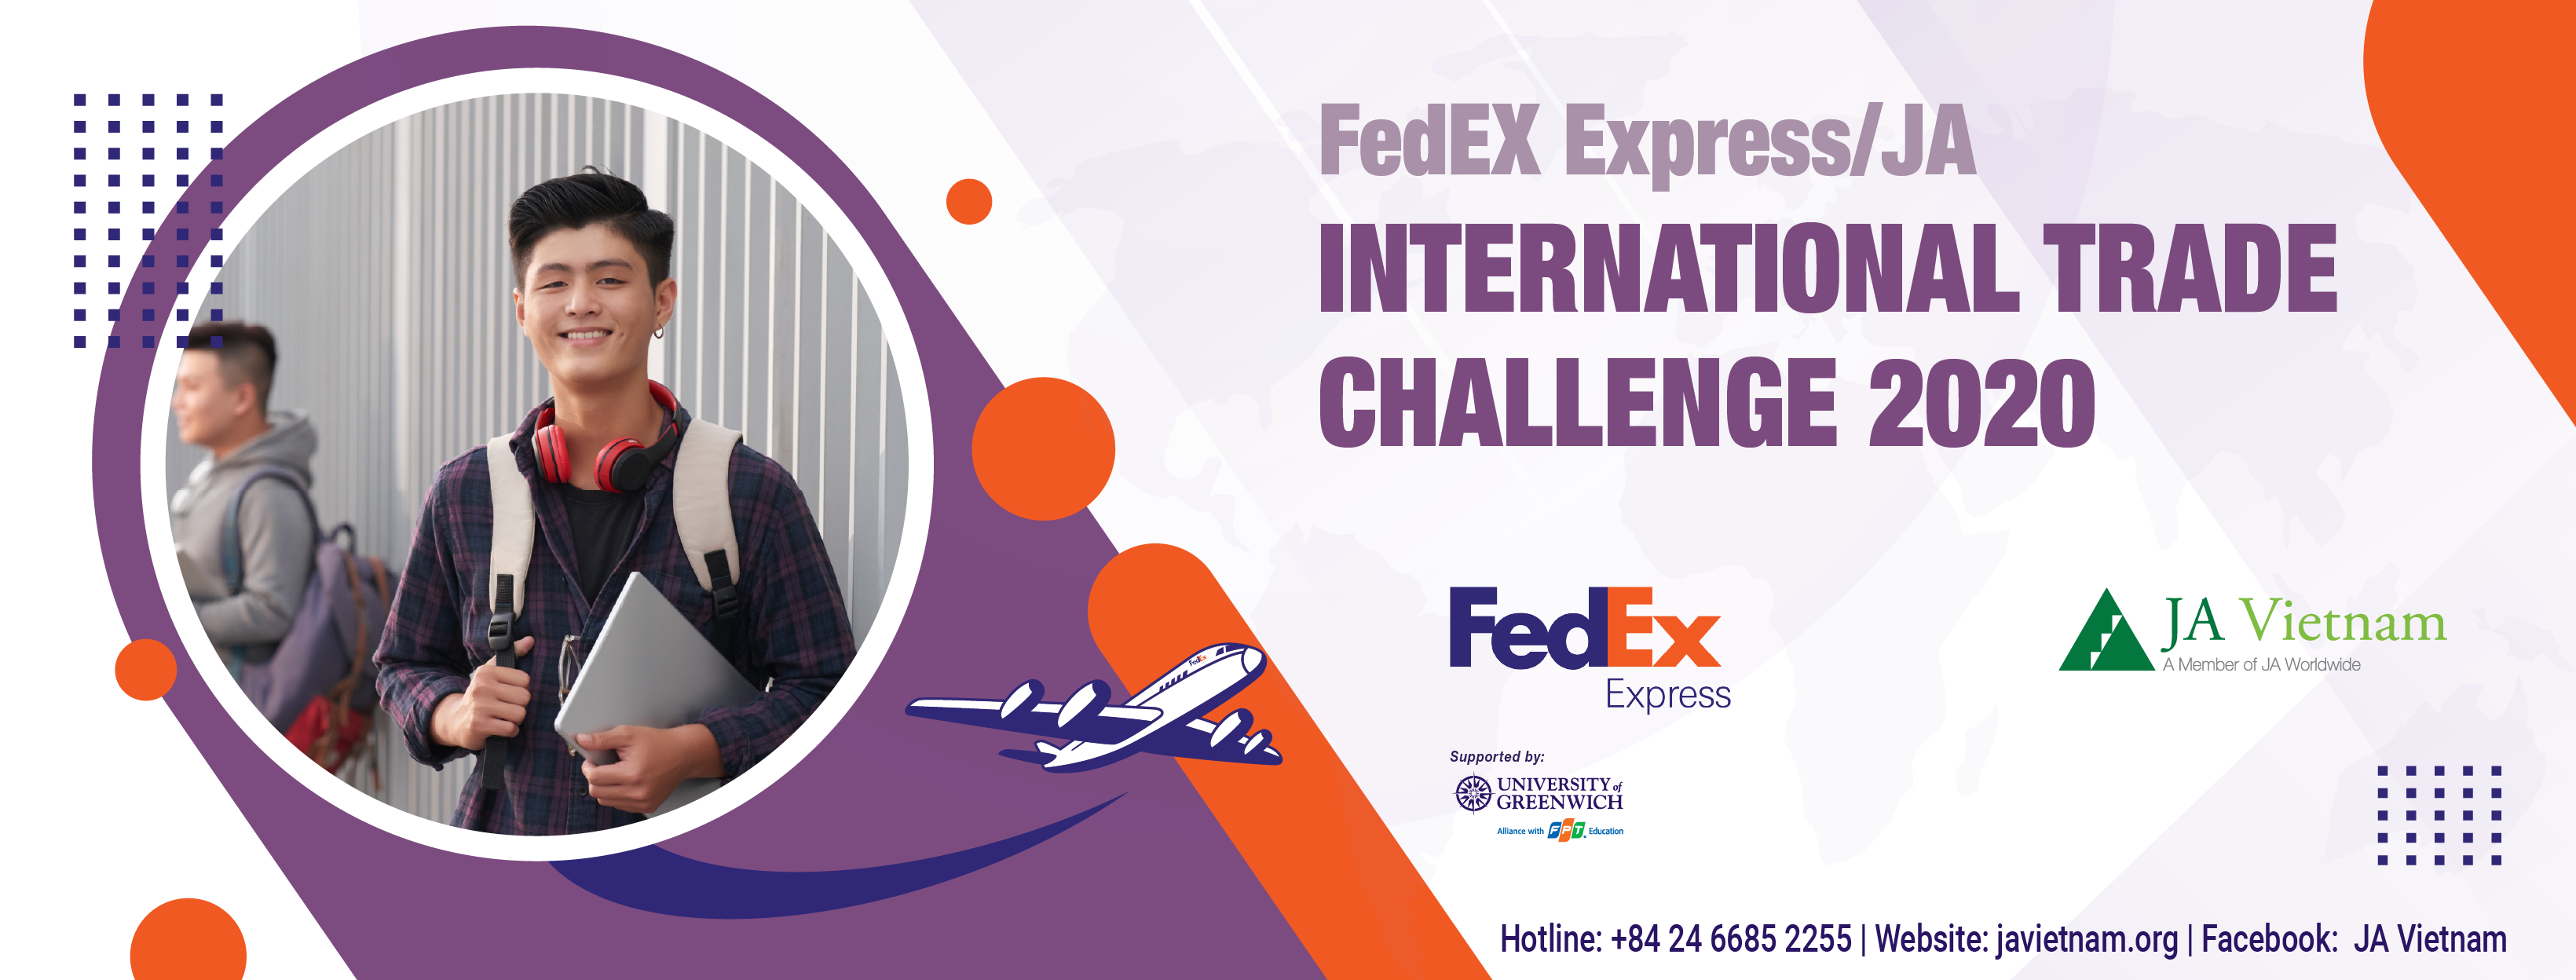 FedEx Express/JA ITC (International Trade Challenge)